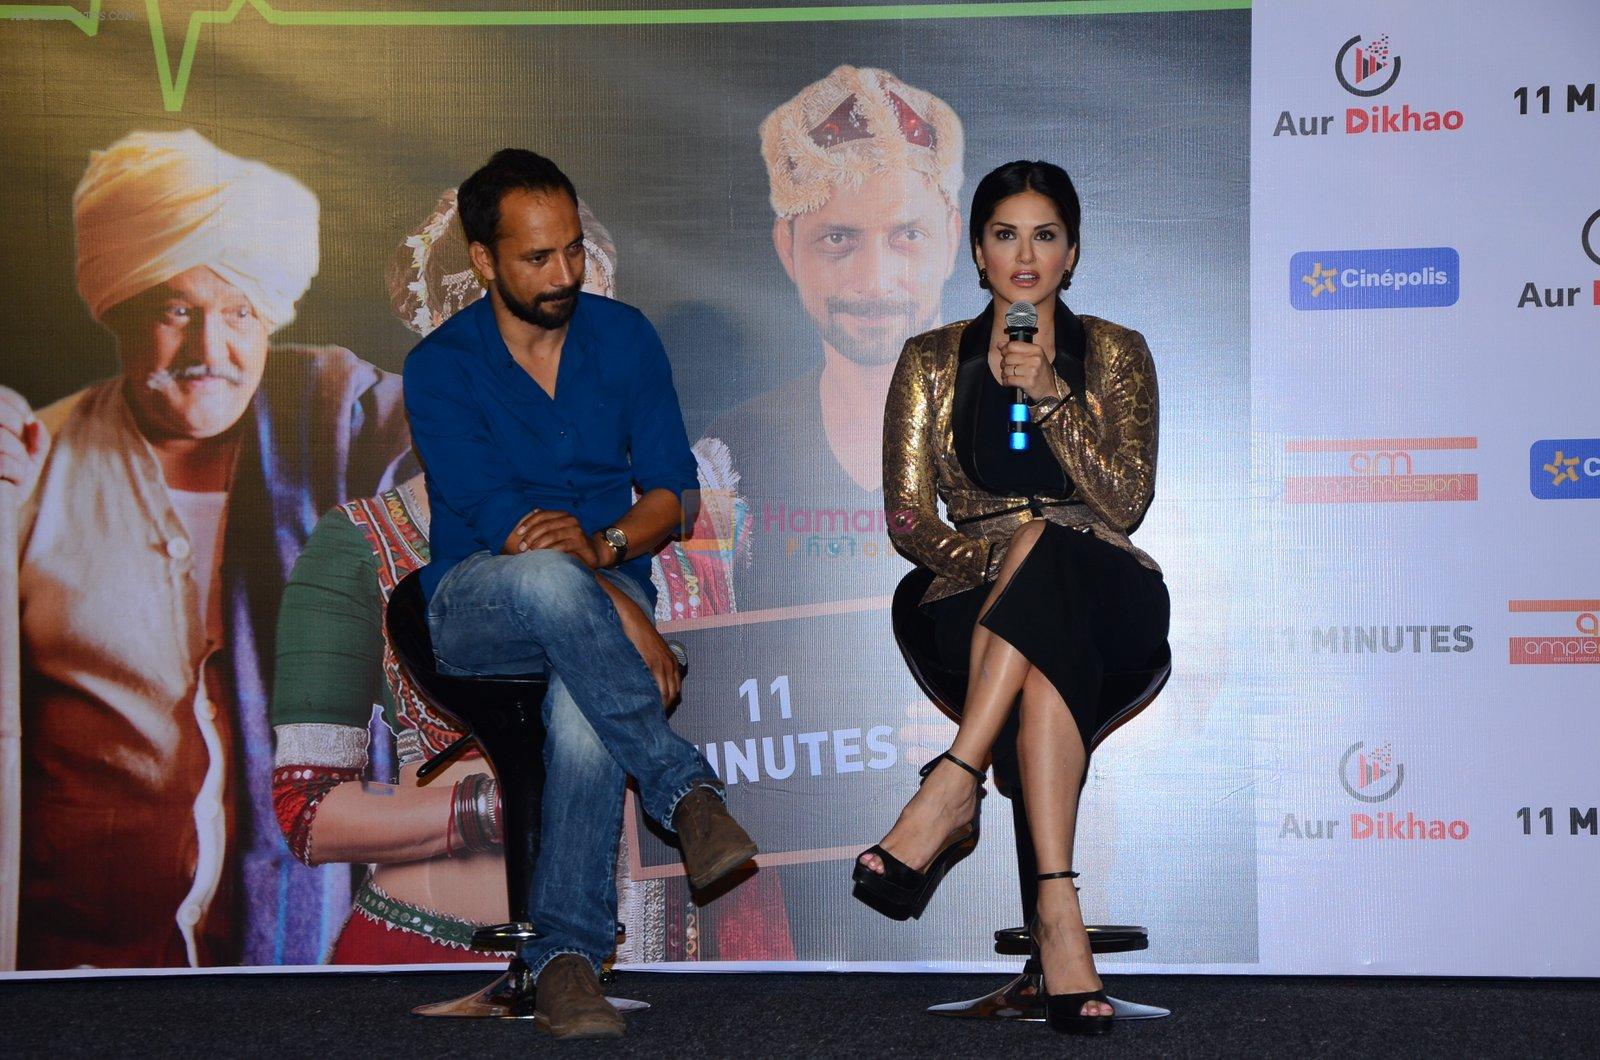 Sunny Leone, Deepak Dobriyal supports Aneel Murarka's anti smoking film in Mumbai on 23rd Feb 2016